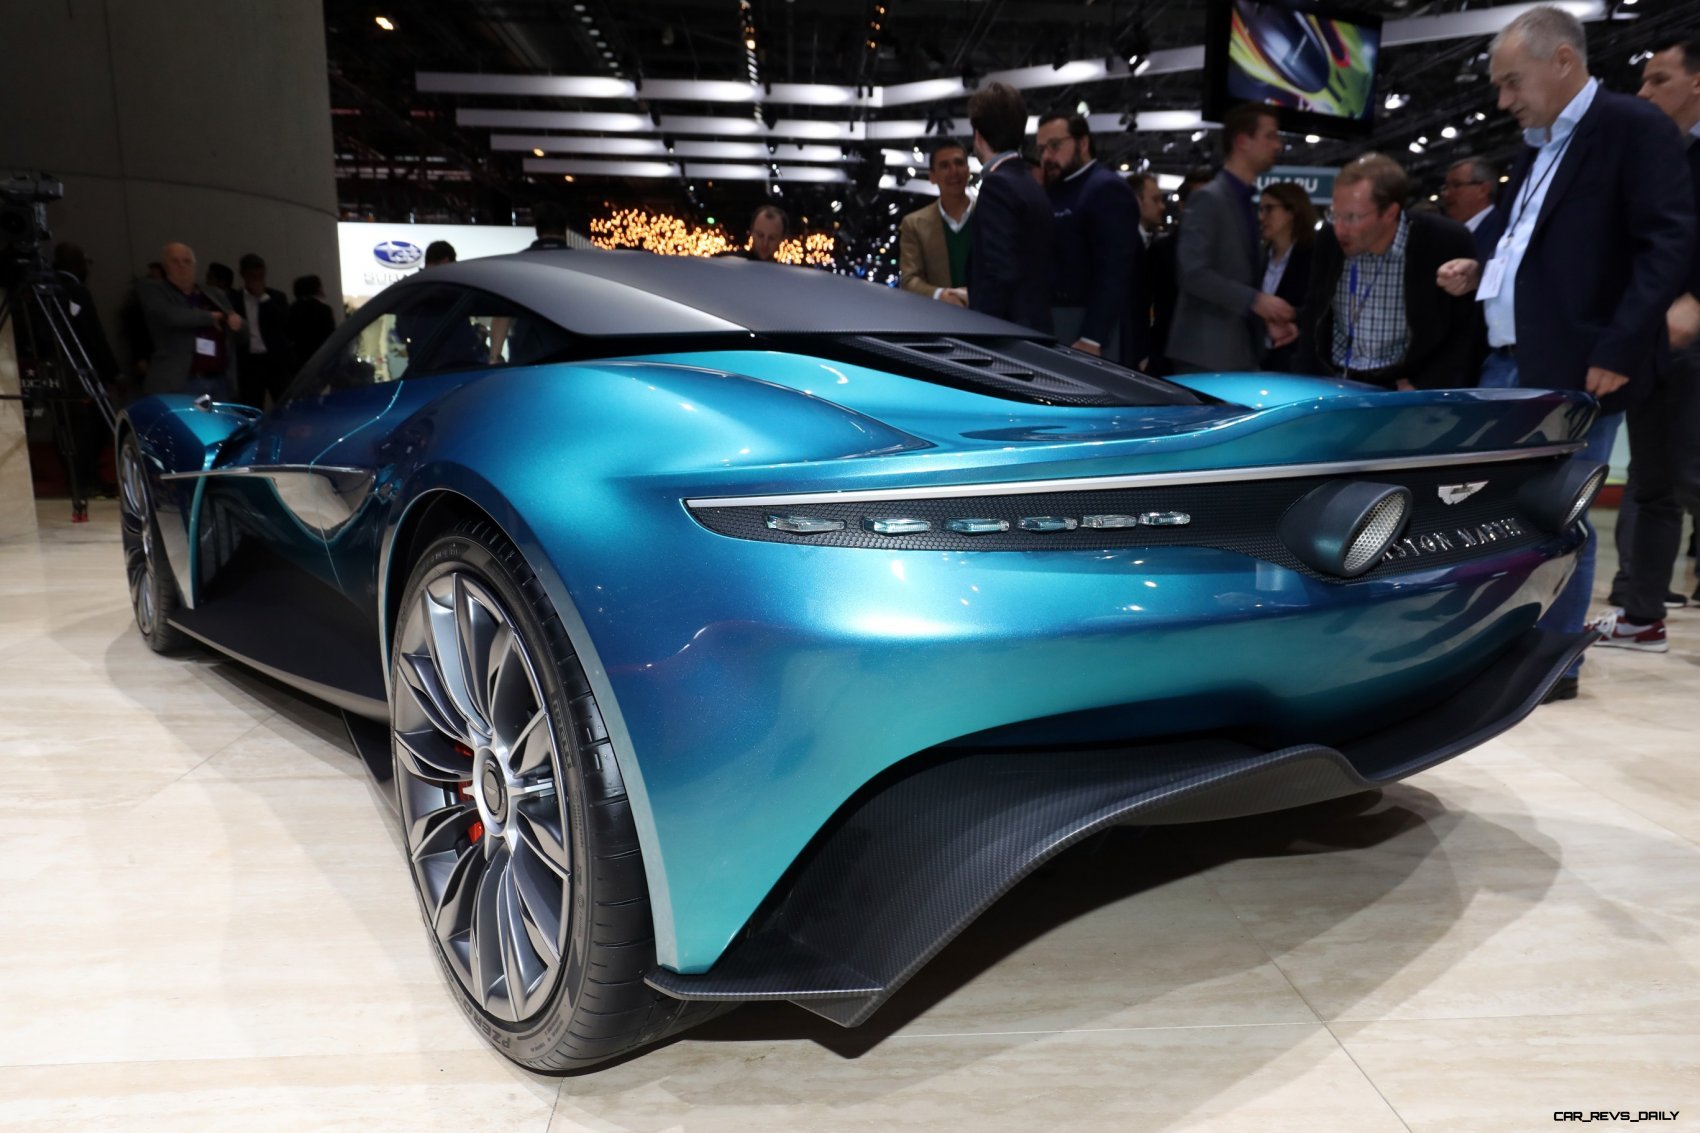 Modern Luxury: The Aston Martin Vanquish Vision Concept